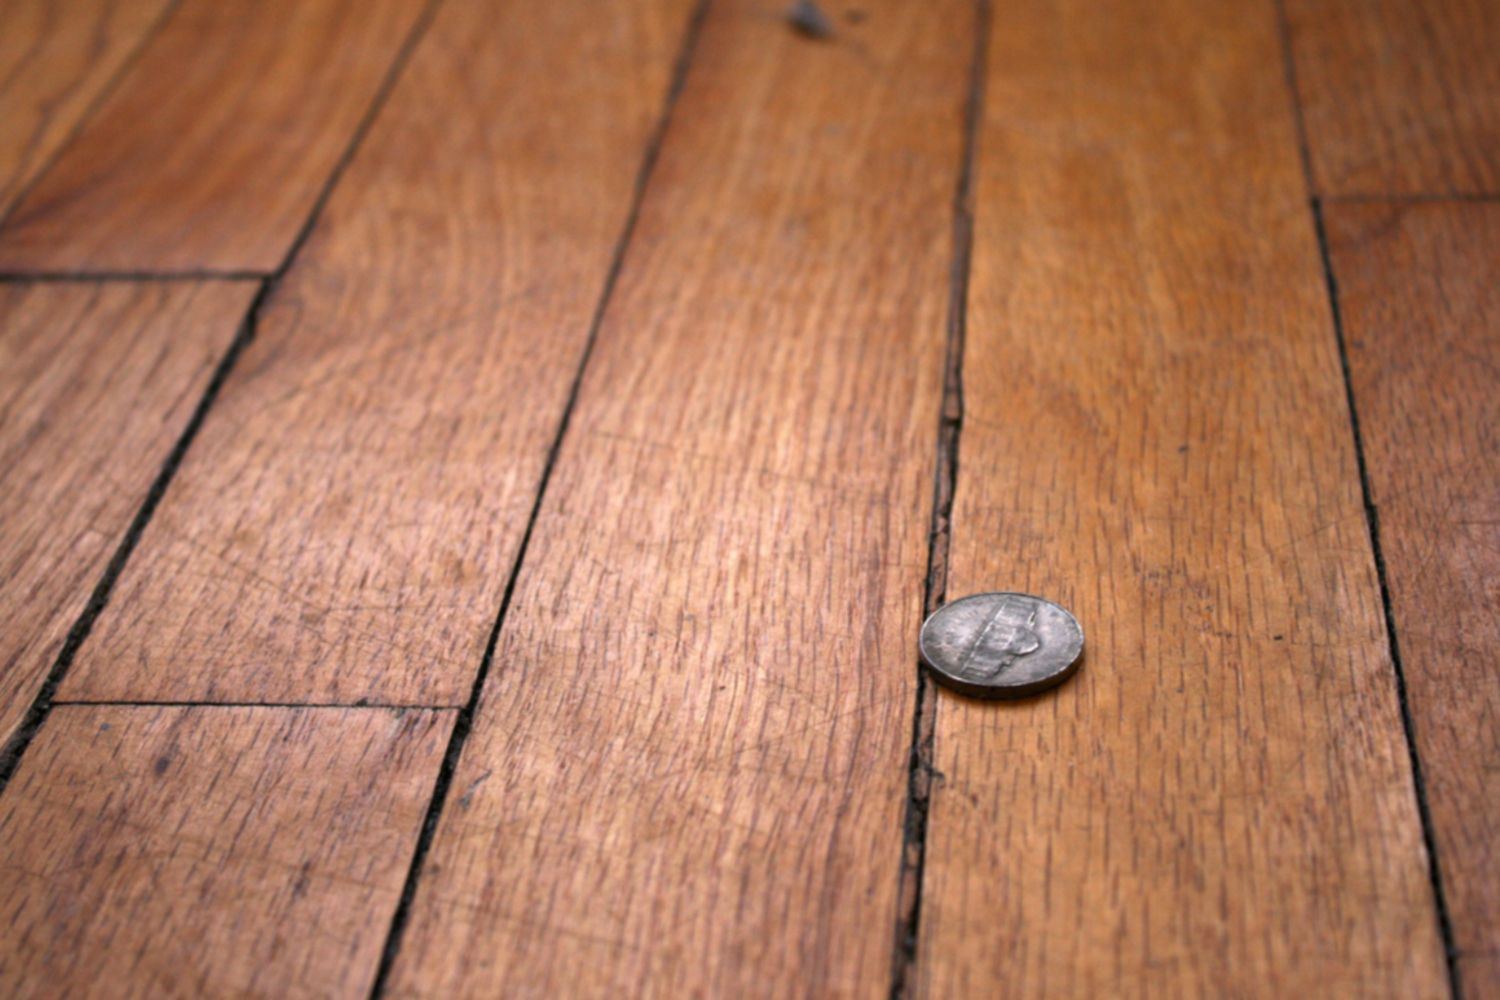 unfinished hardwood floor filler of how to repair gaps between floorboards with wood floor with gaps between boards 1500 x 1000 56a49eb25f9b58b7d0d7df8d